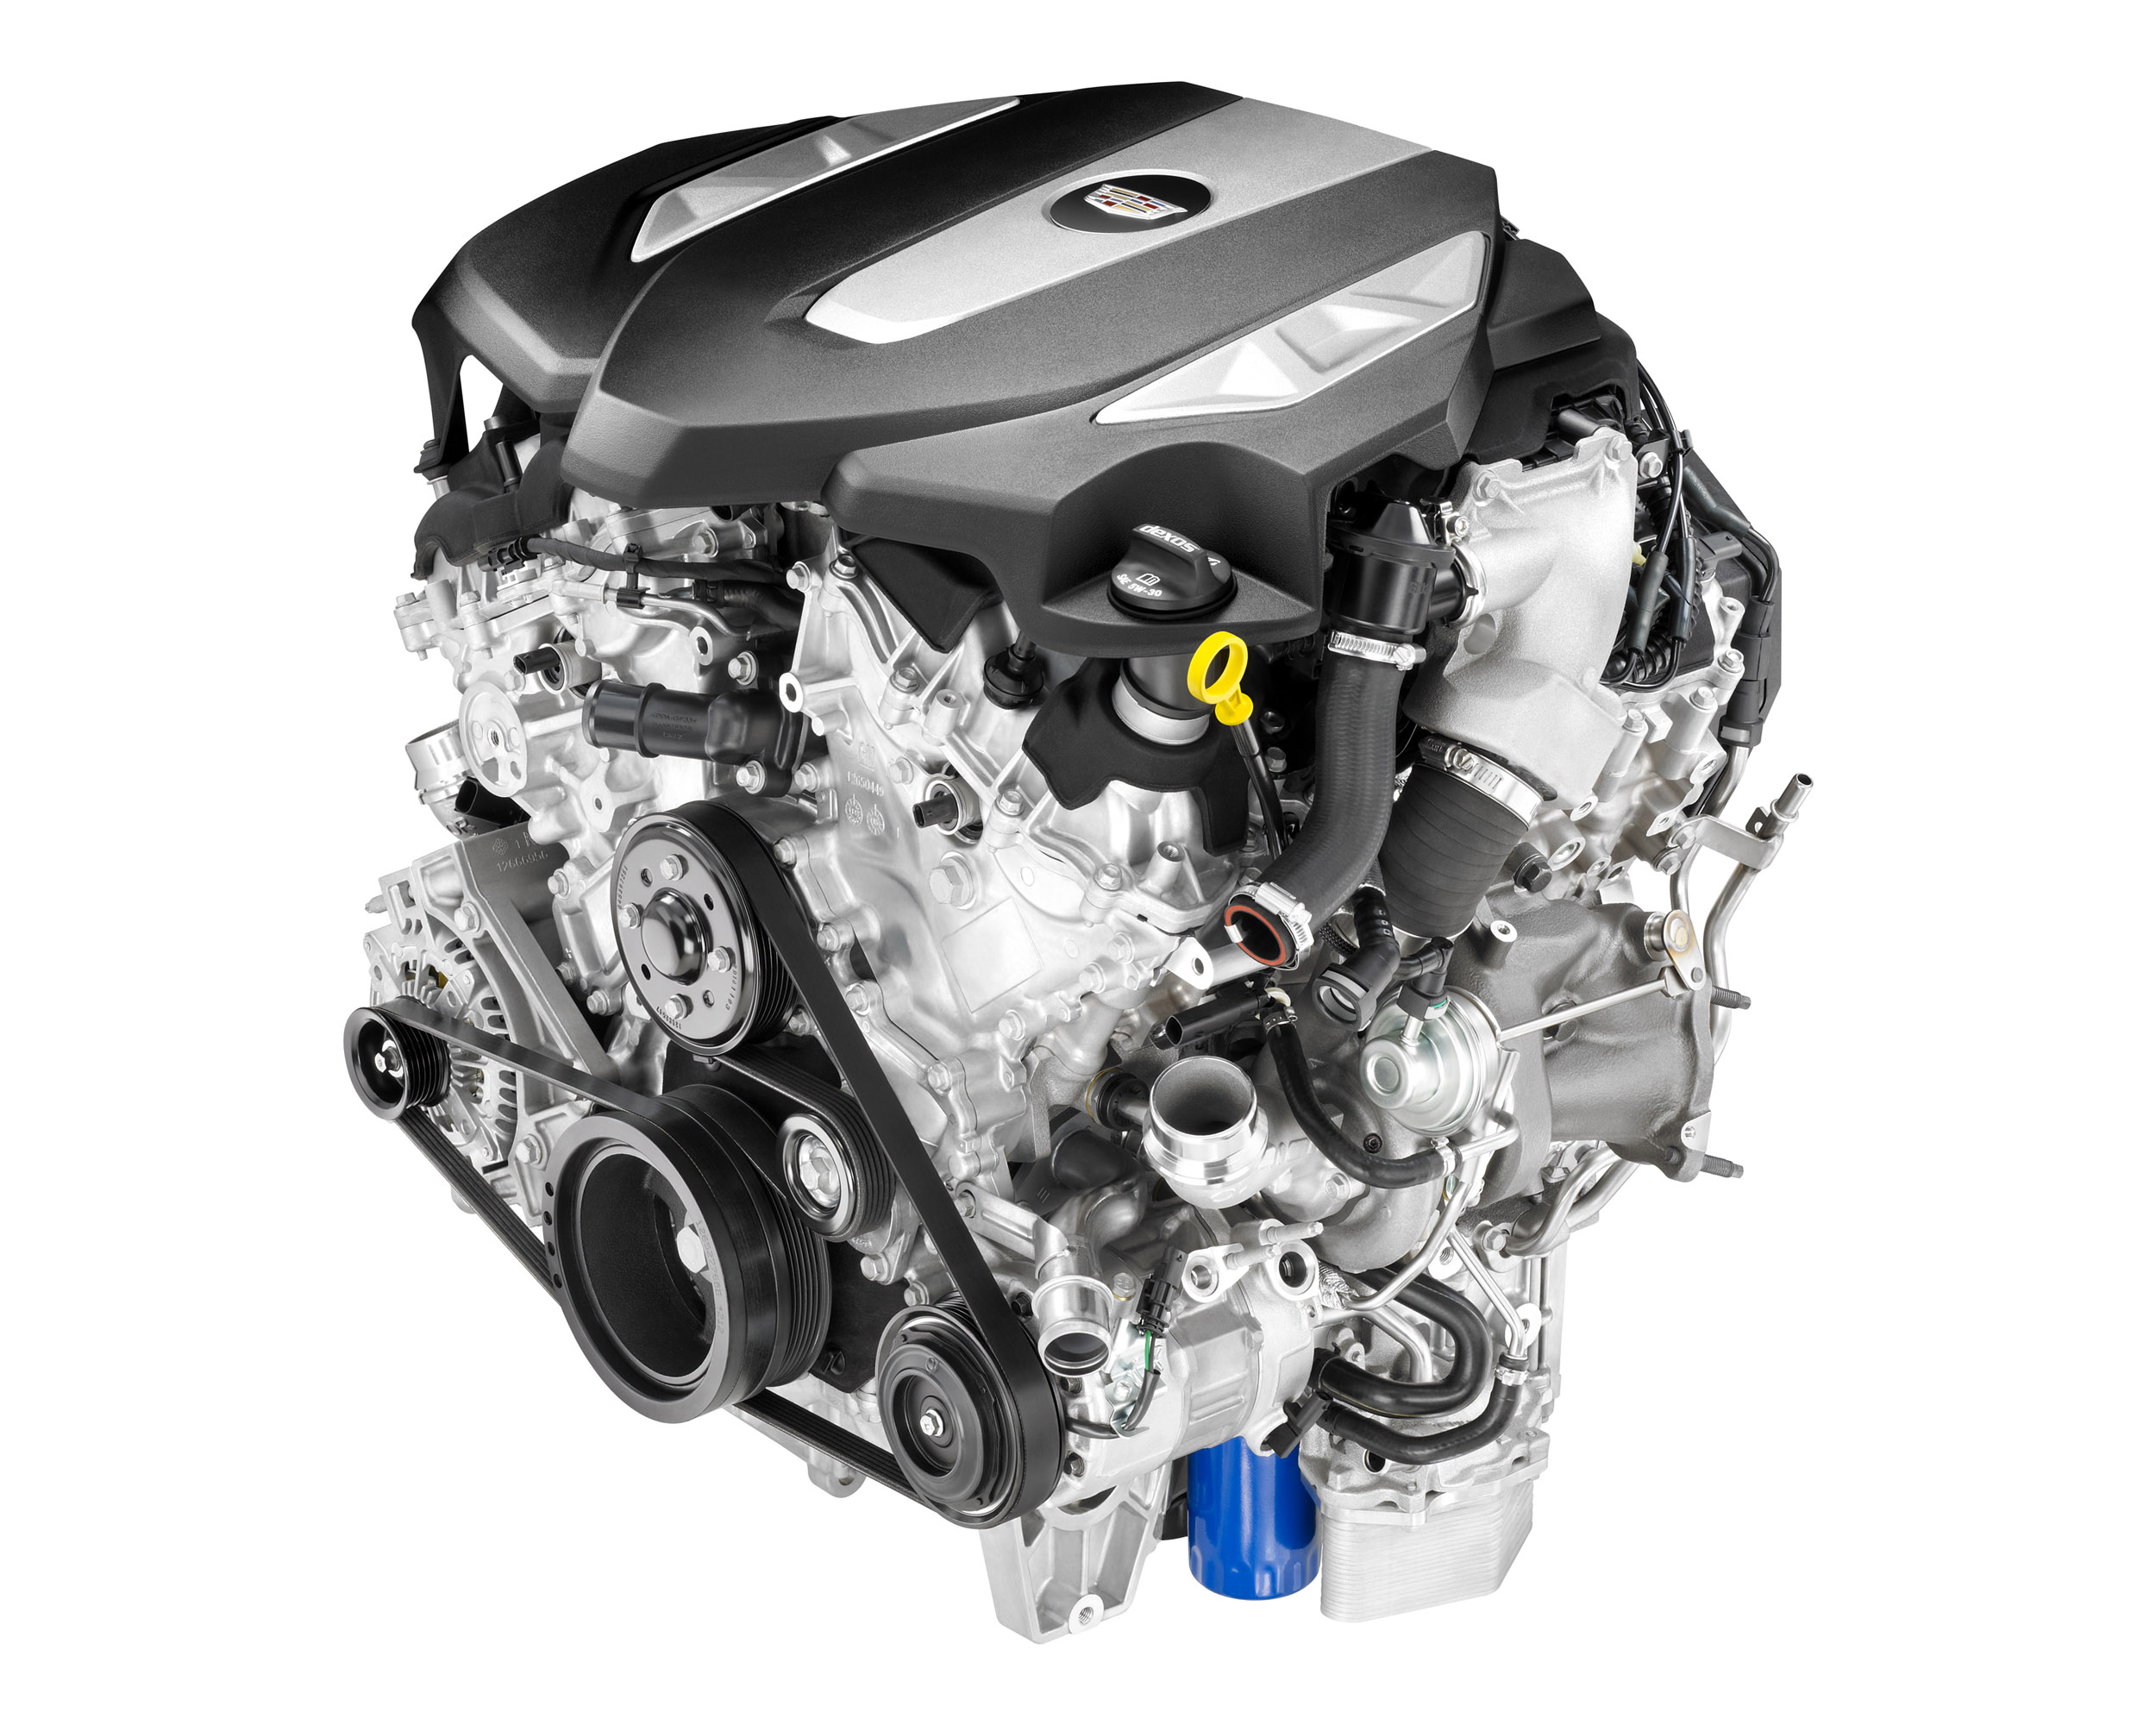 Cadillac CT6 3.0L Twin Turbo Engine